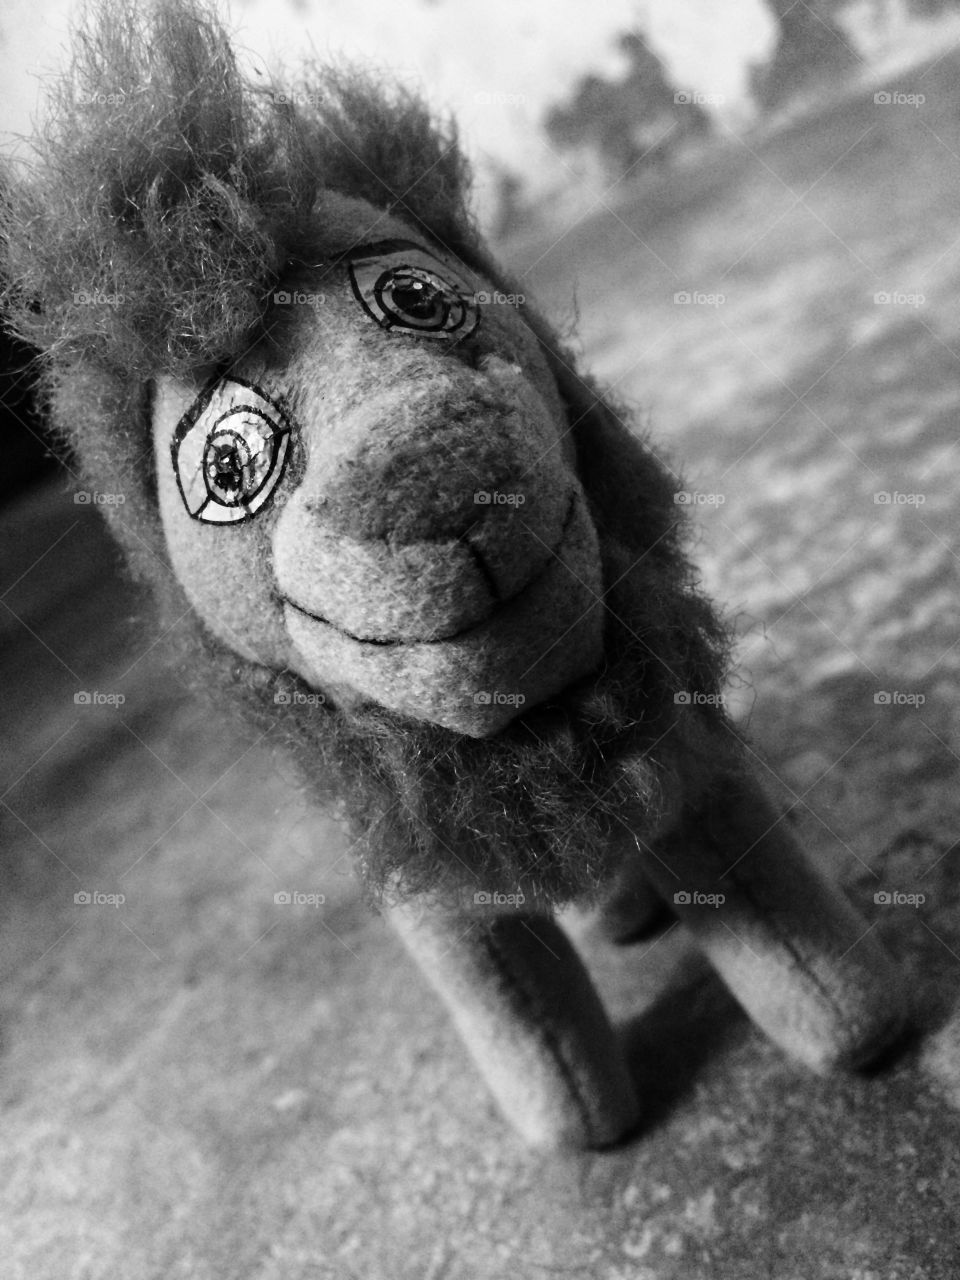 #baby #lion #black&white 
